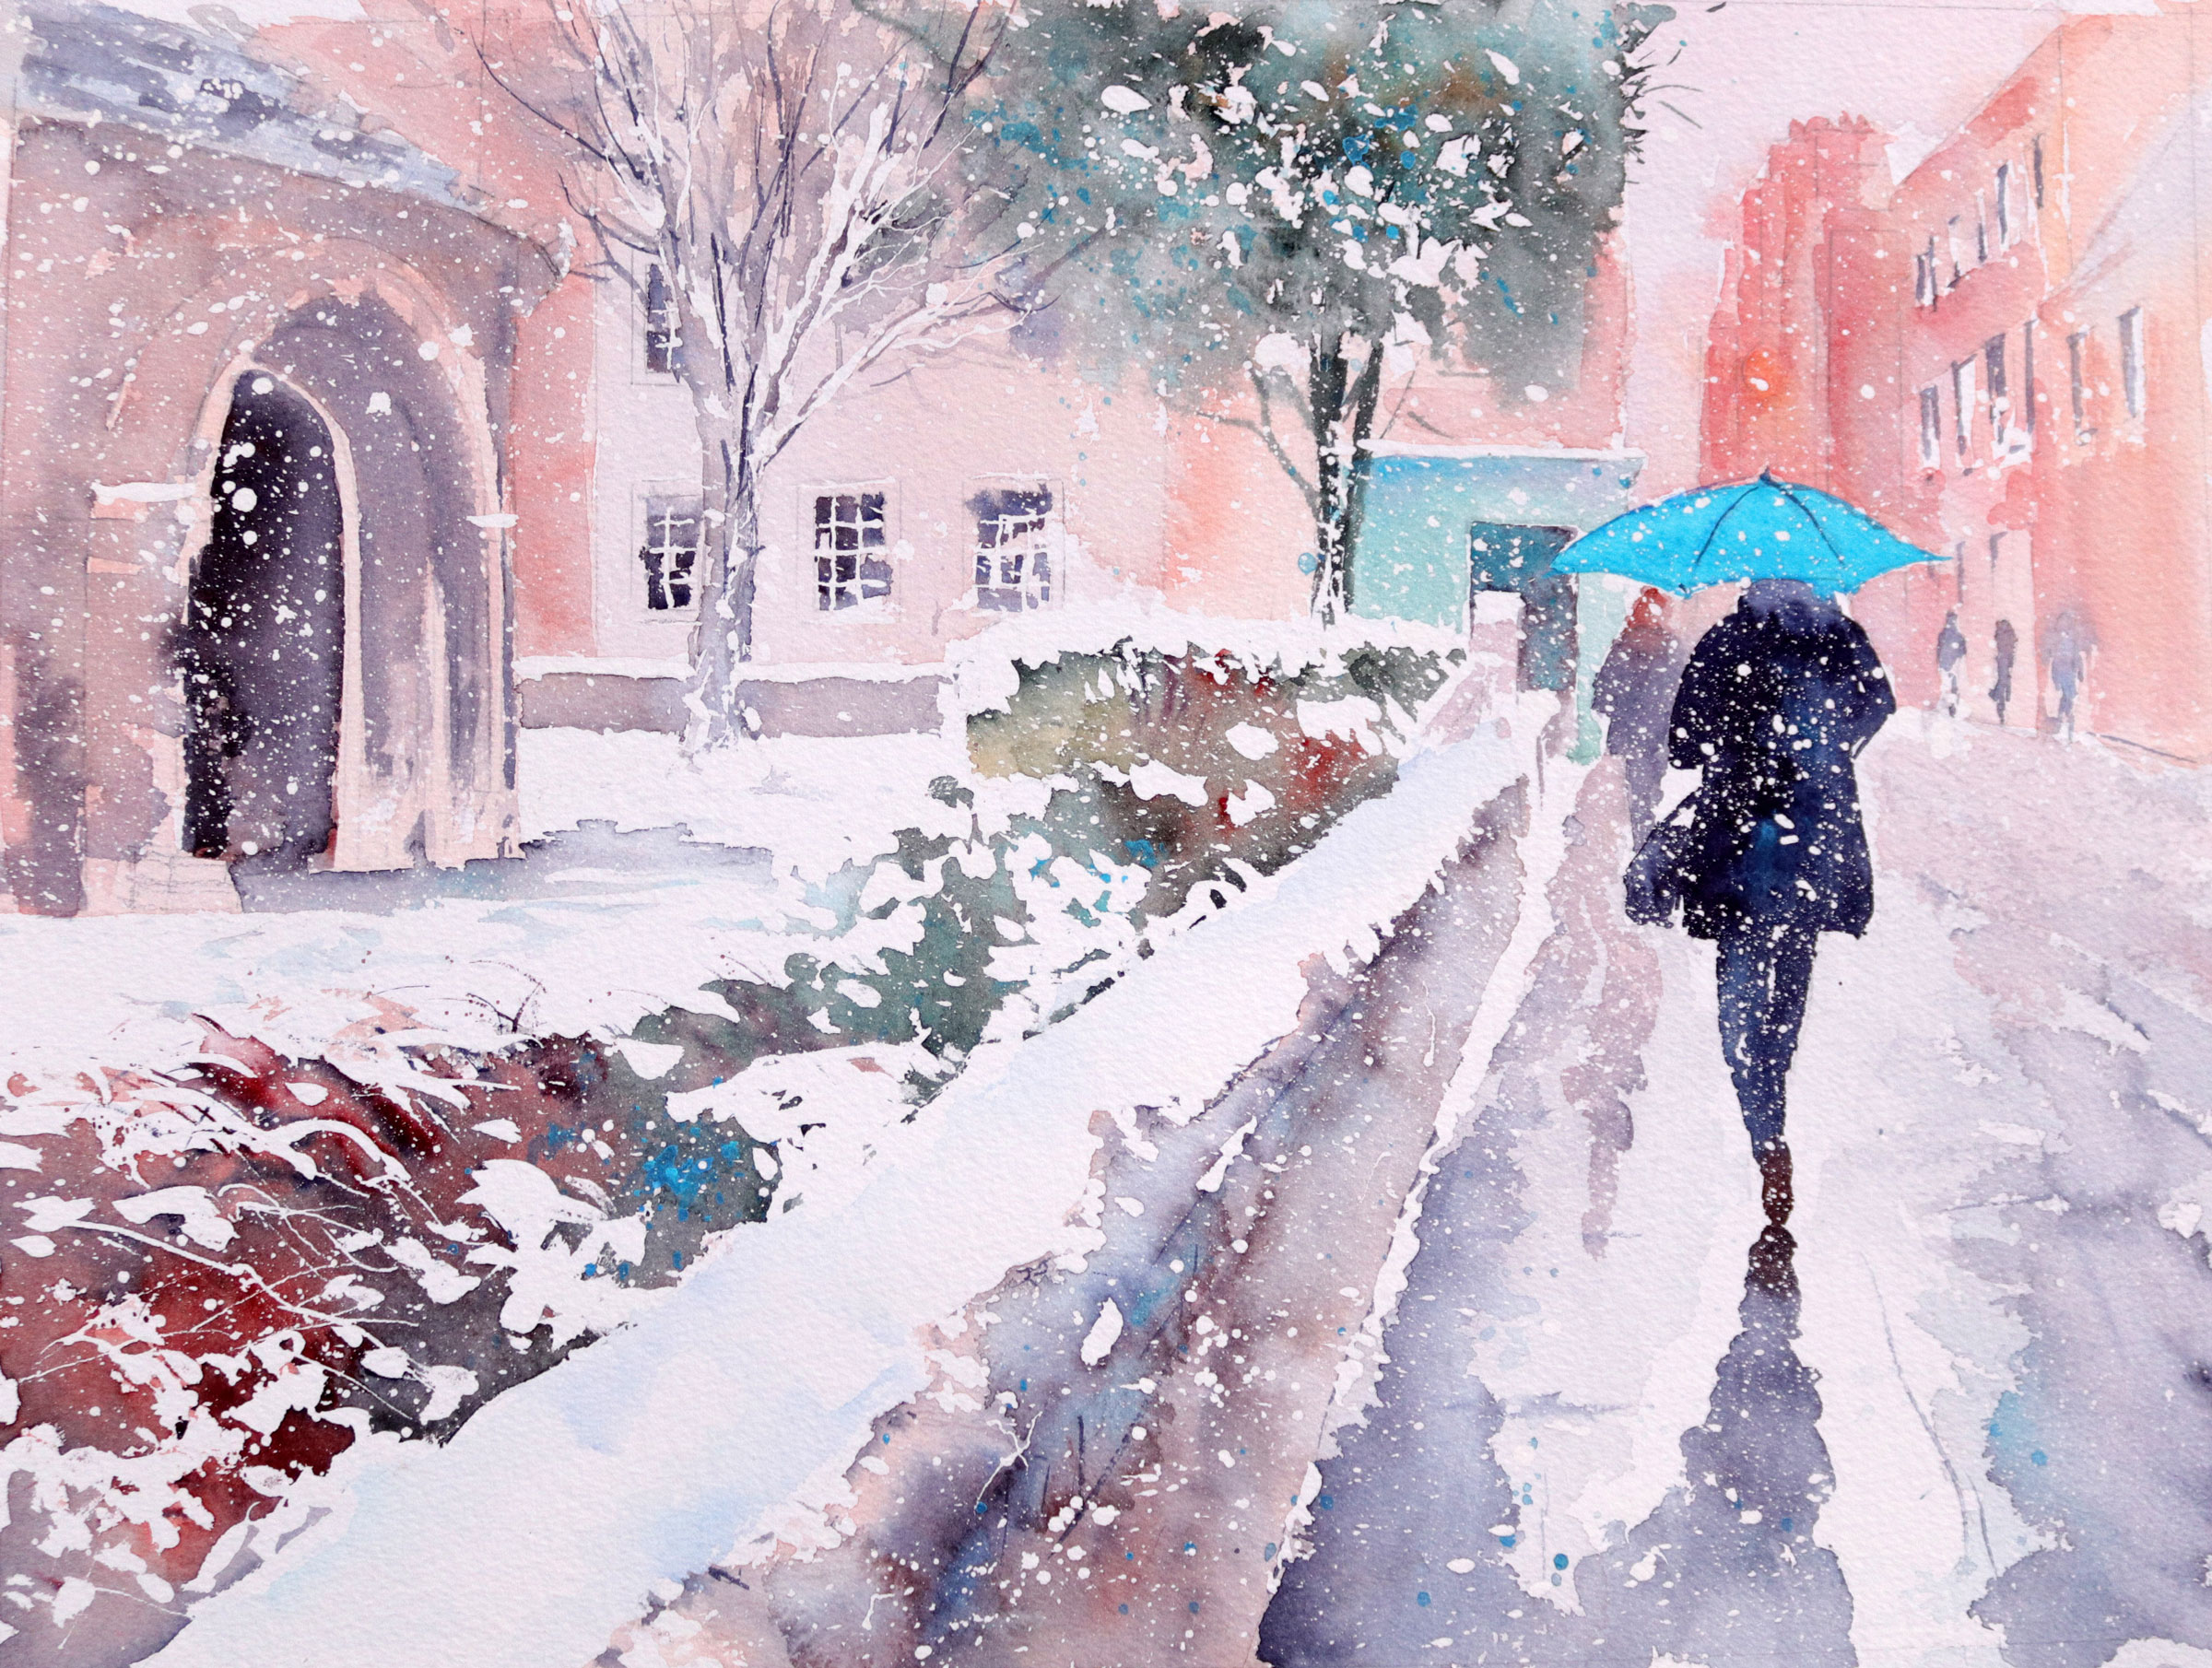 The Blue Umbrella, Snowy Cambridge (Chris Lockwood)